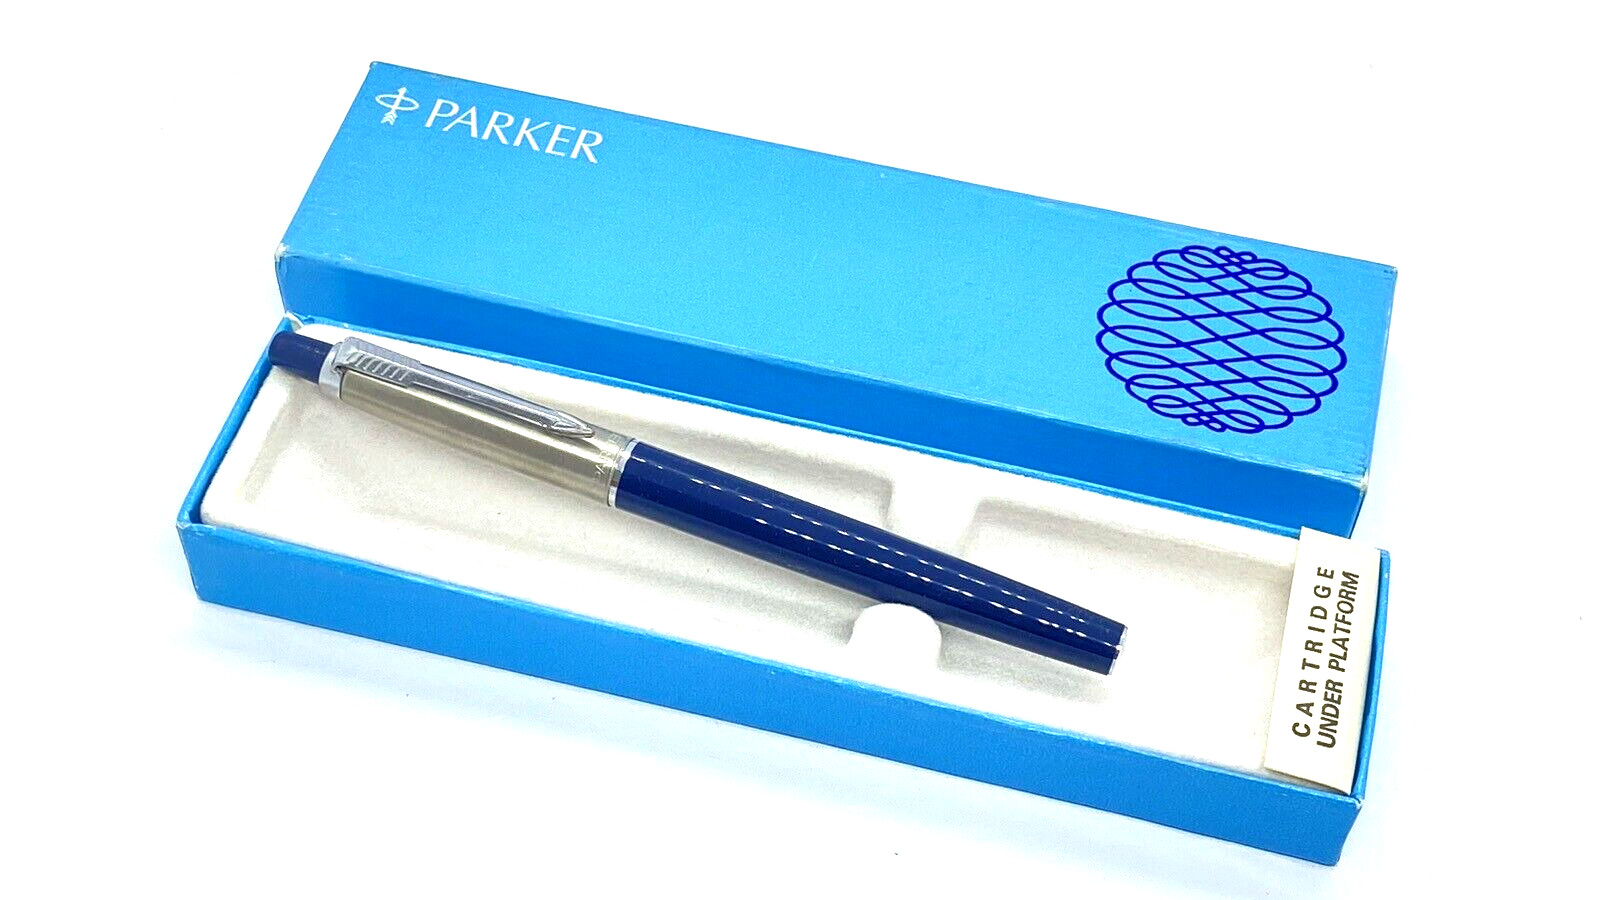 VINTAGE PARKER FELT TIP PEN IN BOX DARK BLUE IN BOX MADE IN ENGLAND EXCELLENT